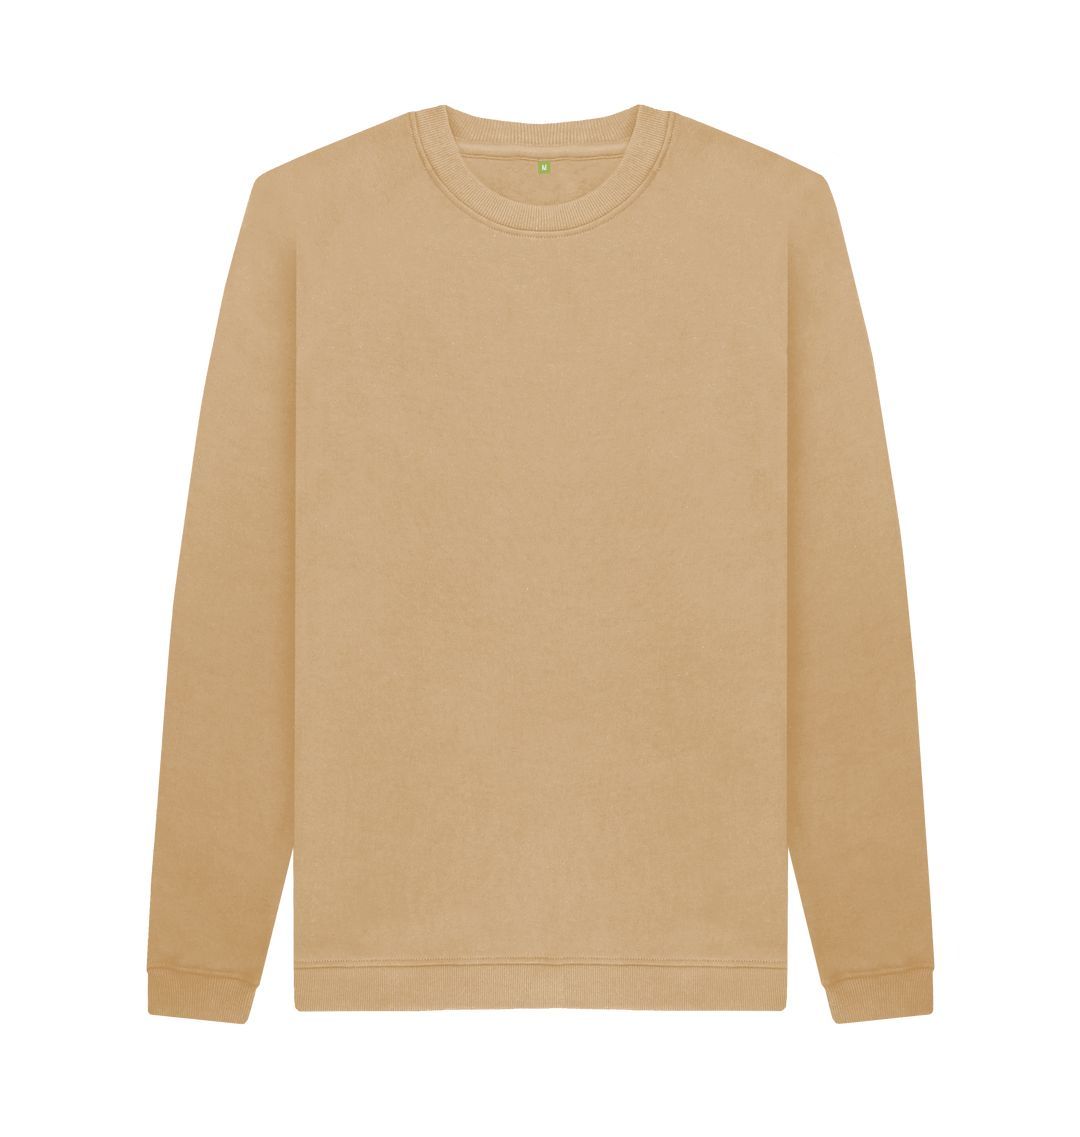 Sand Men's organic cotton sweater